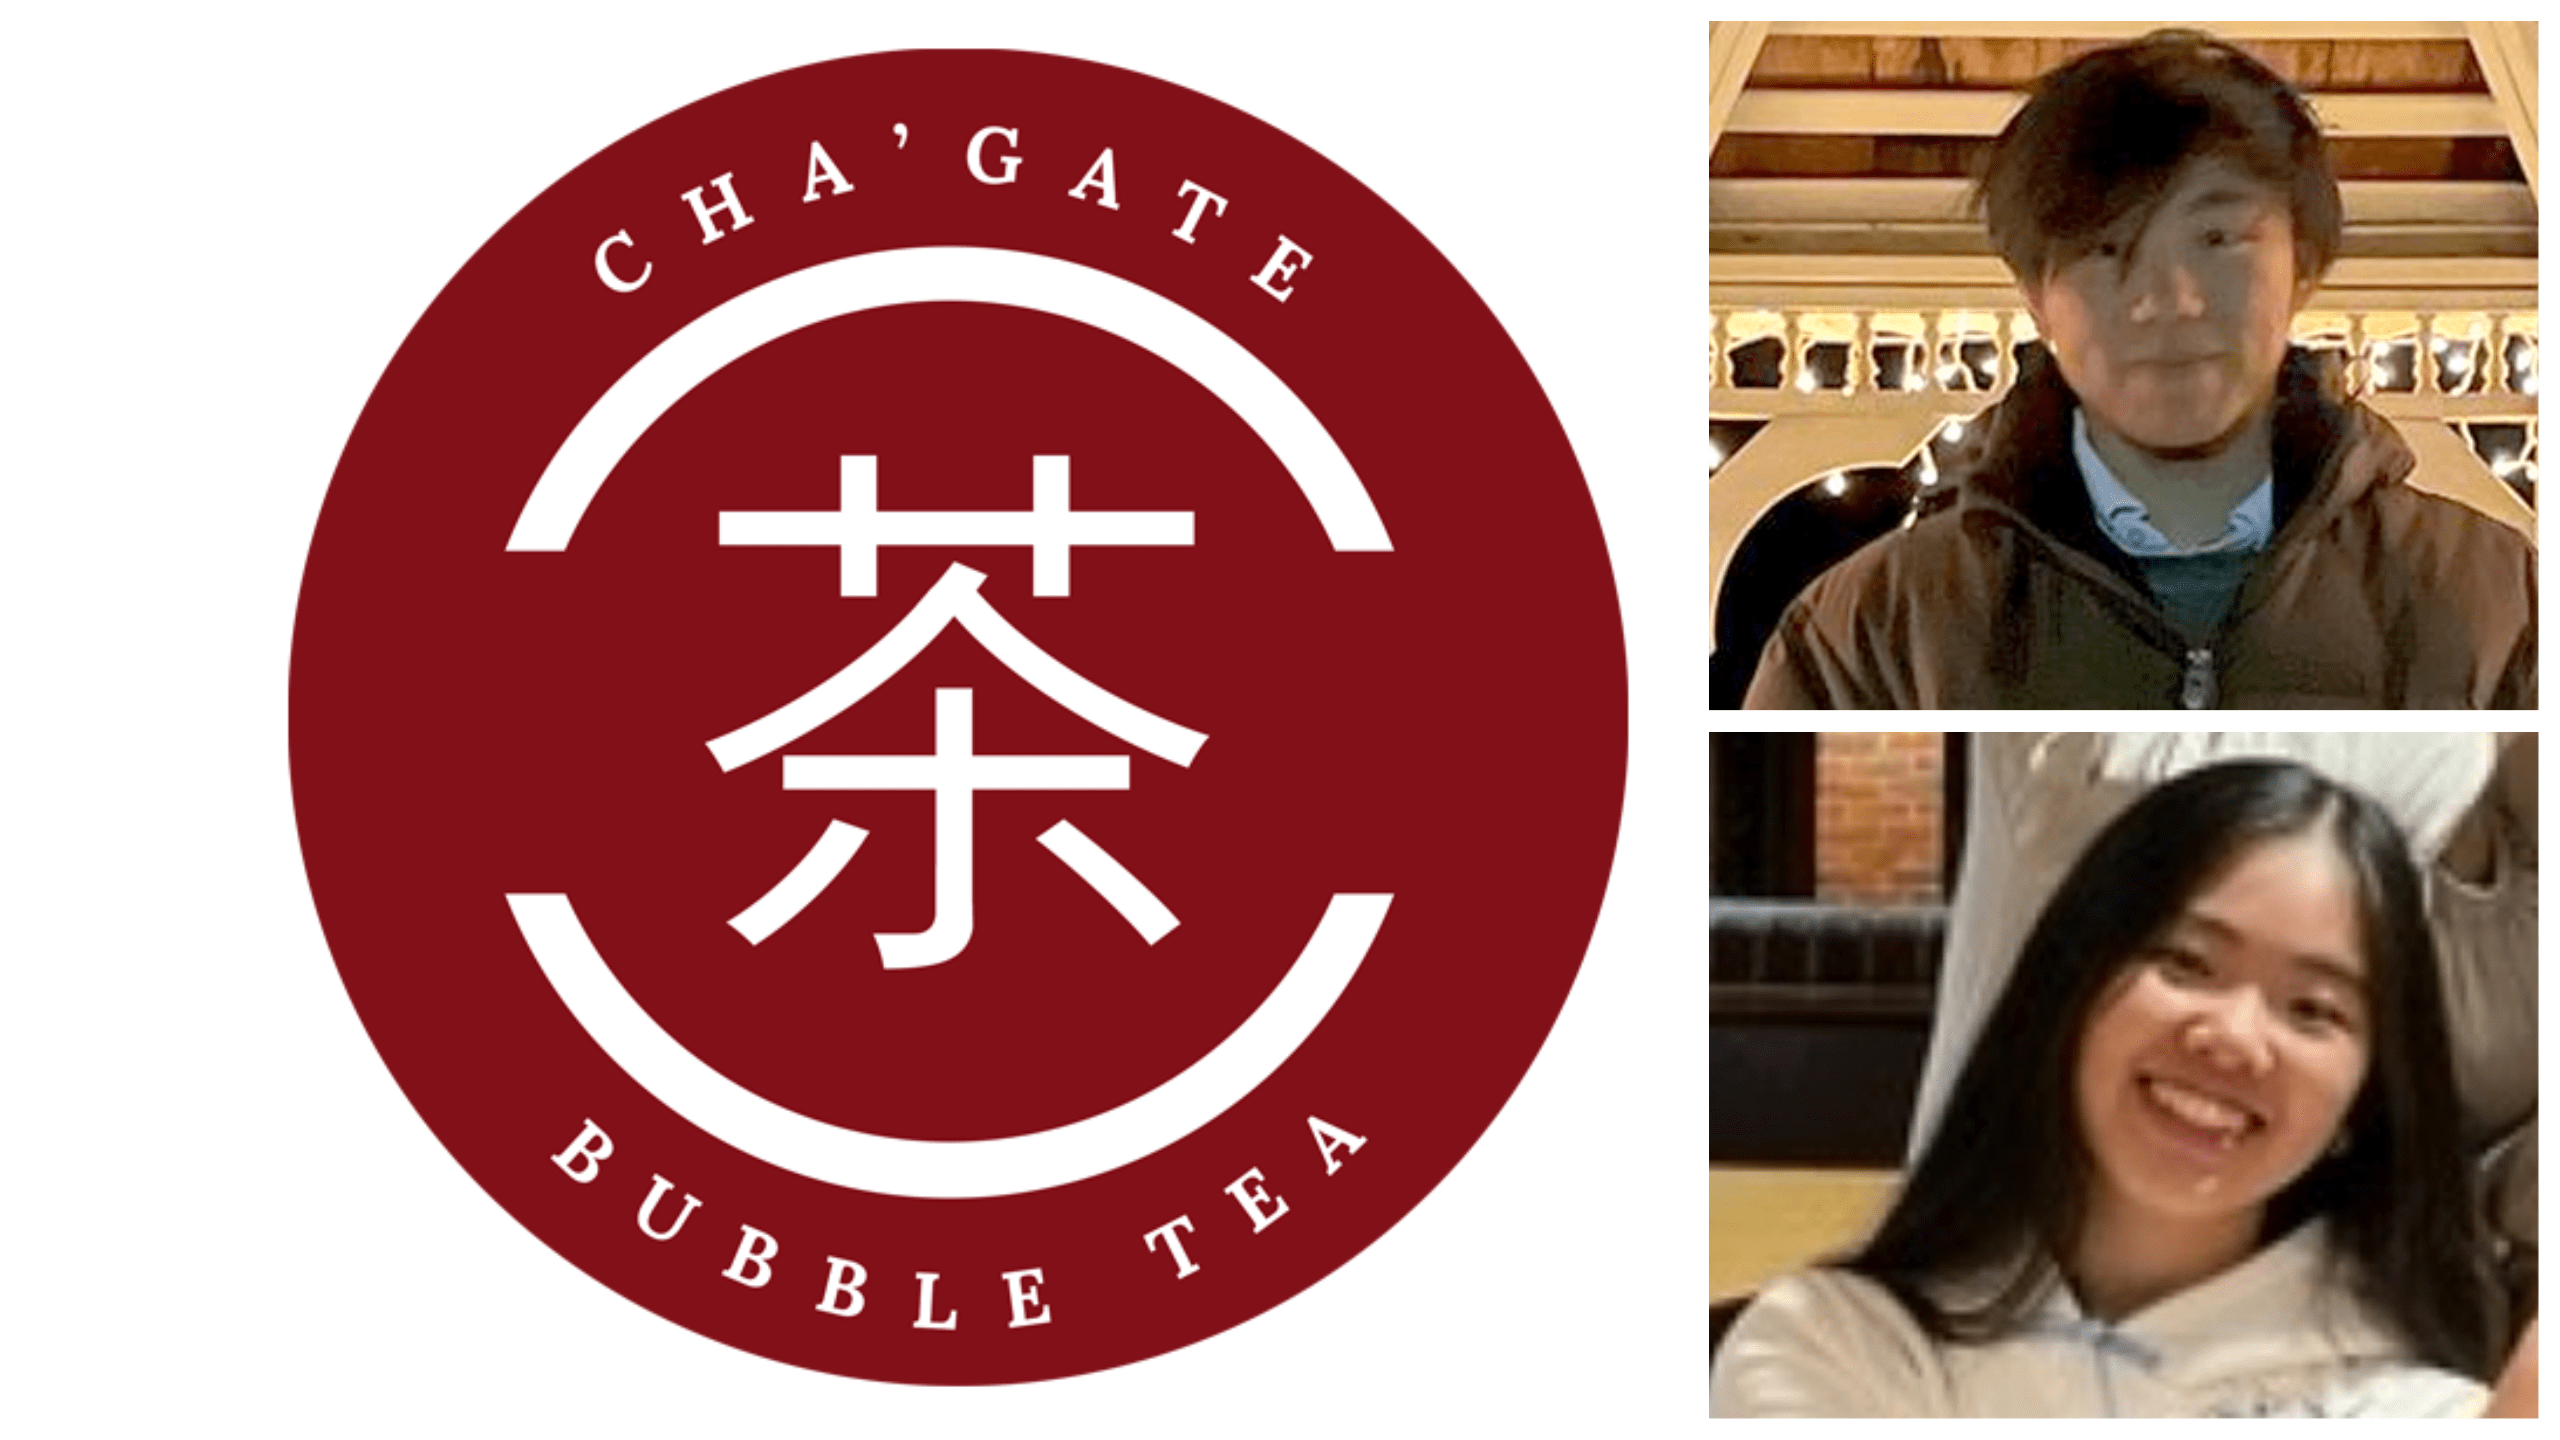 Cha'Gate Bubble Tea logo with founder headshots